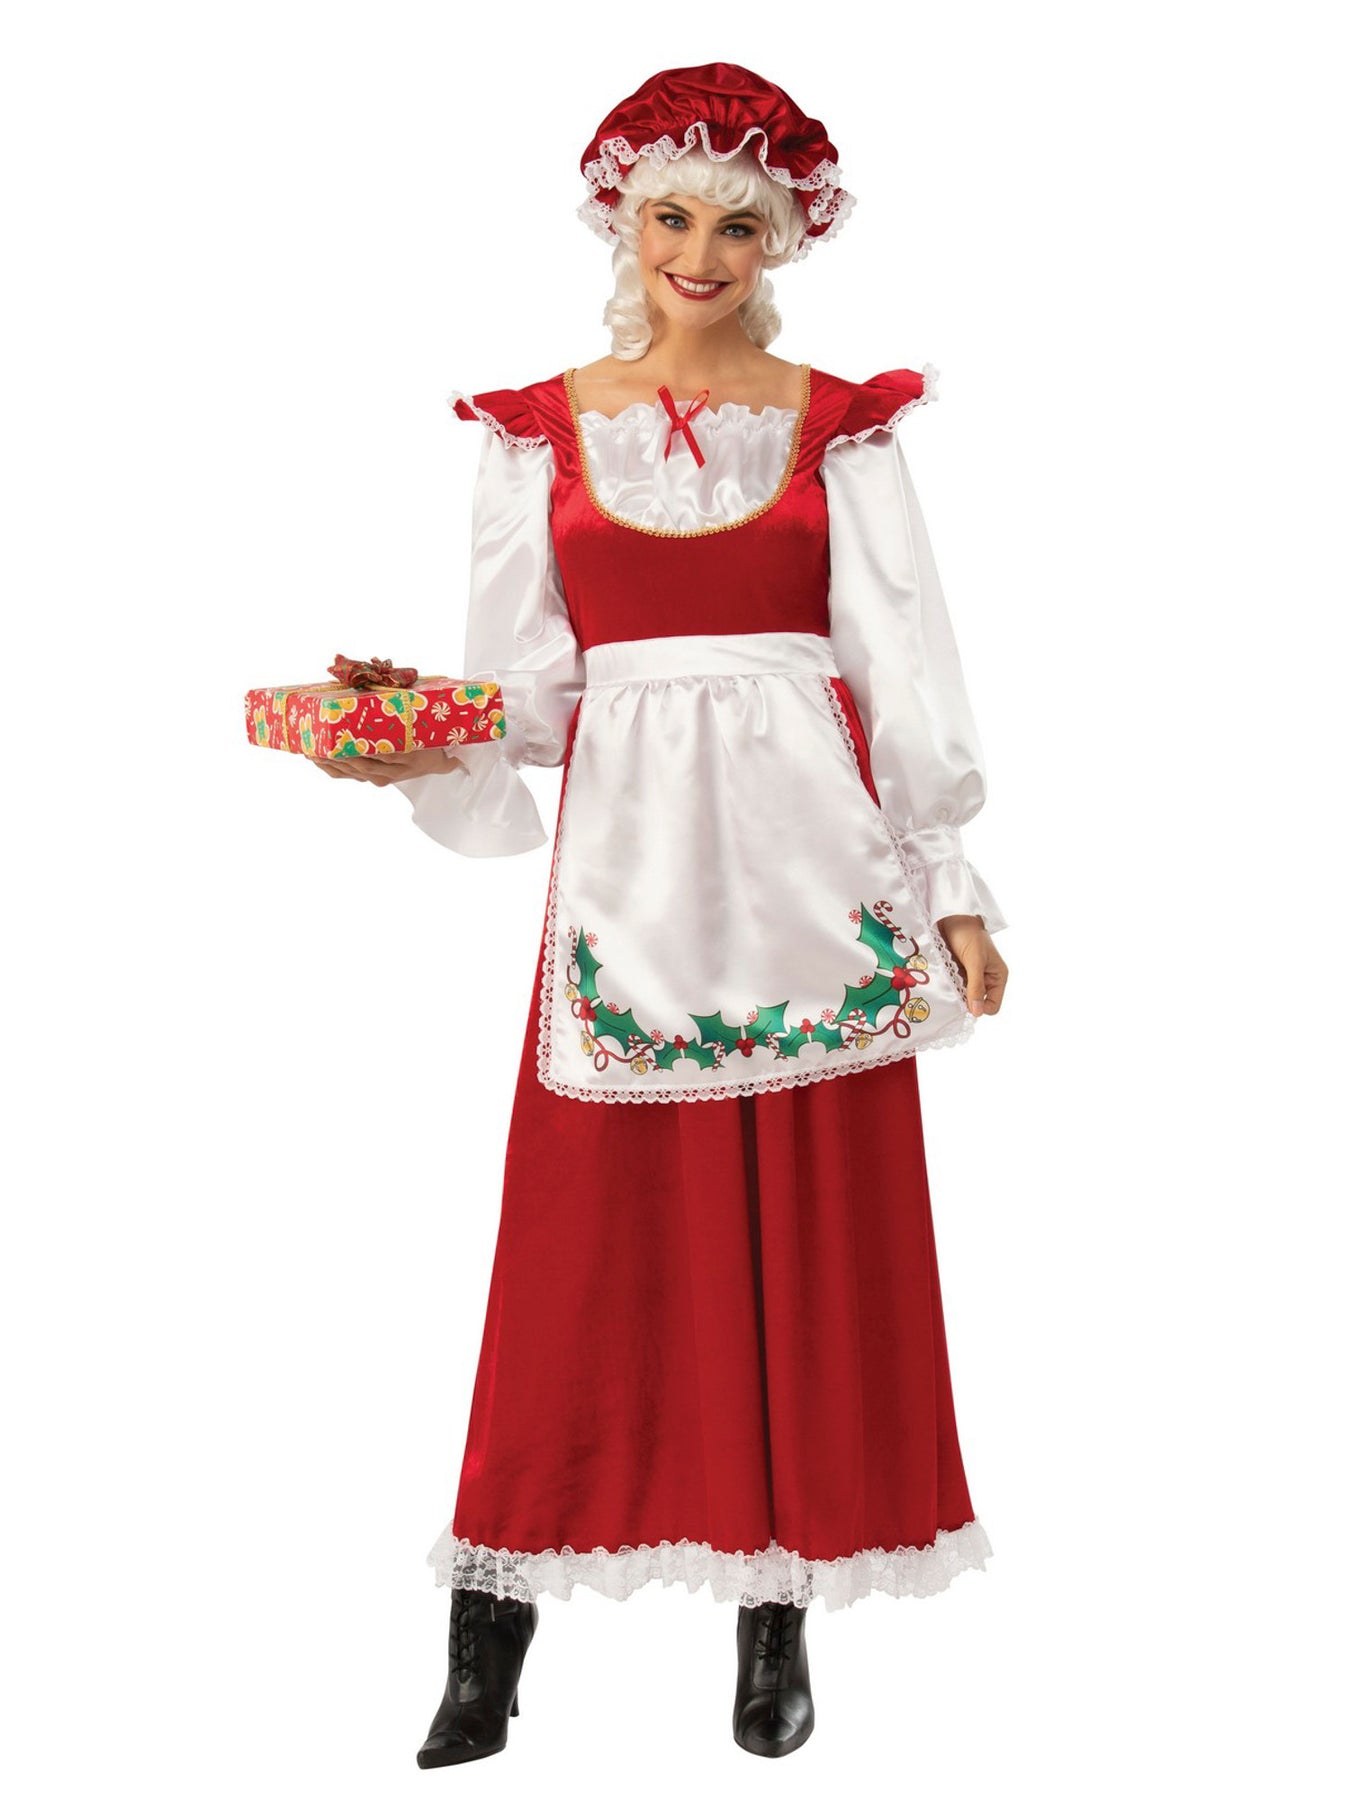 Mrs. Claus Costumes